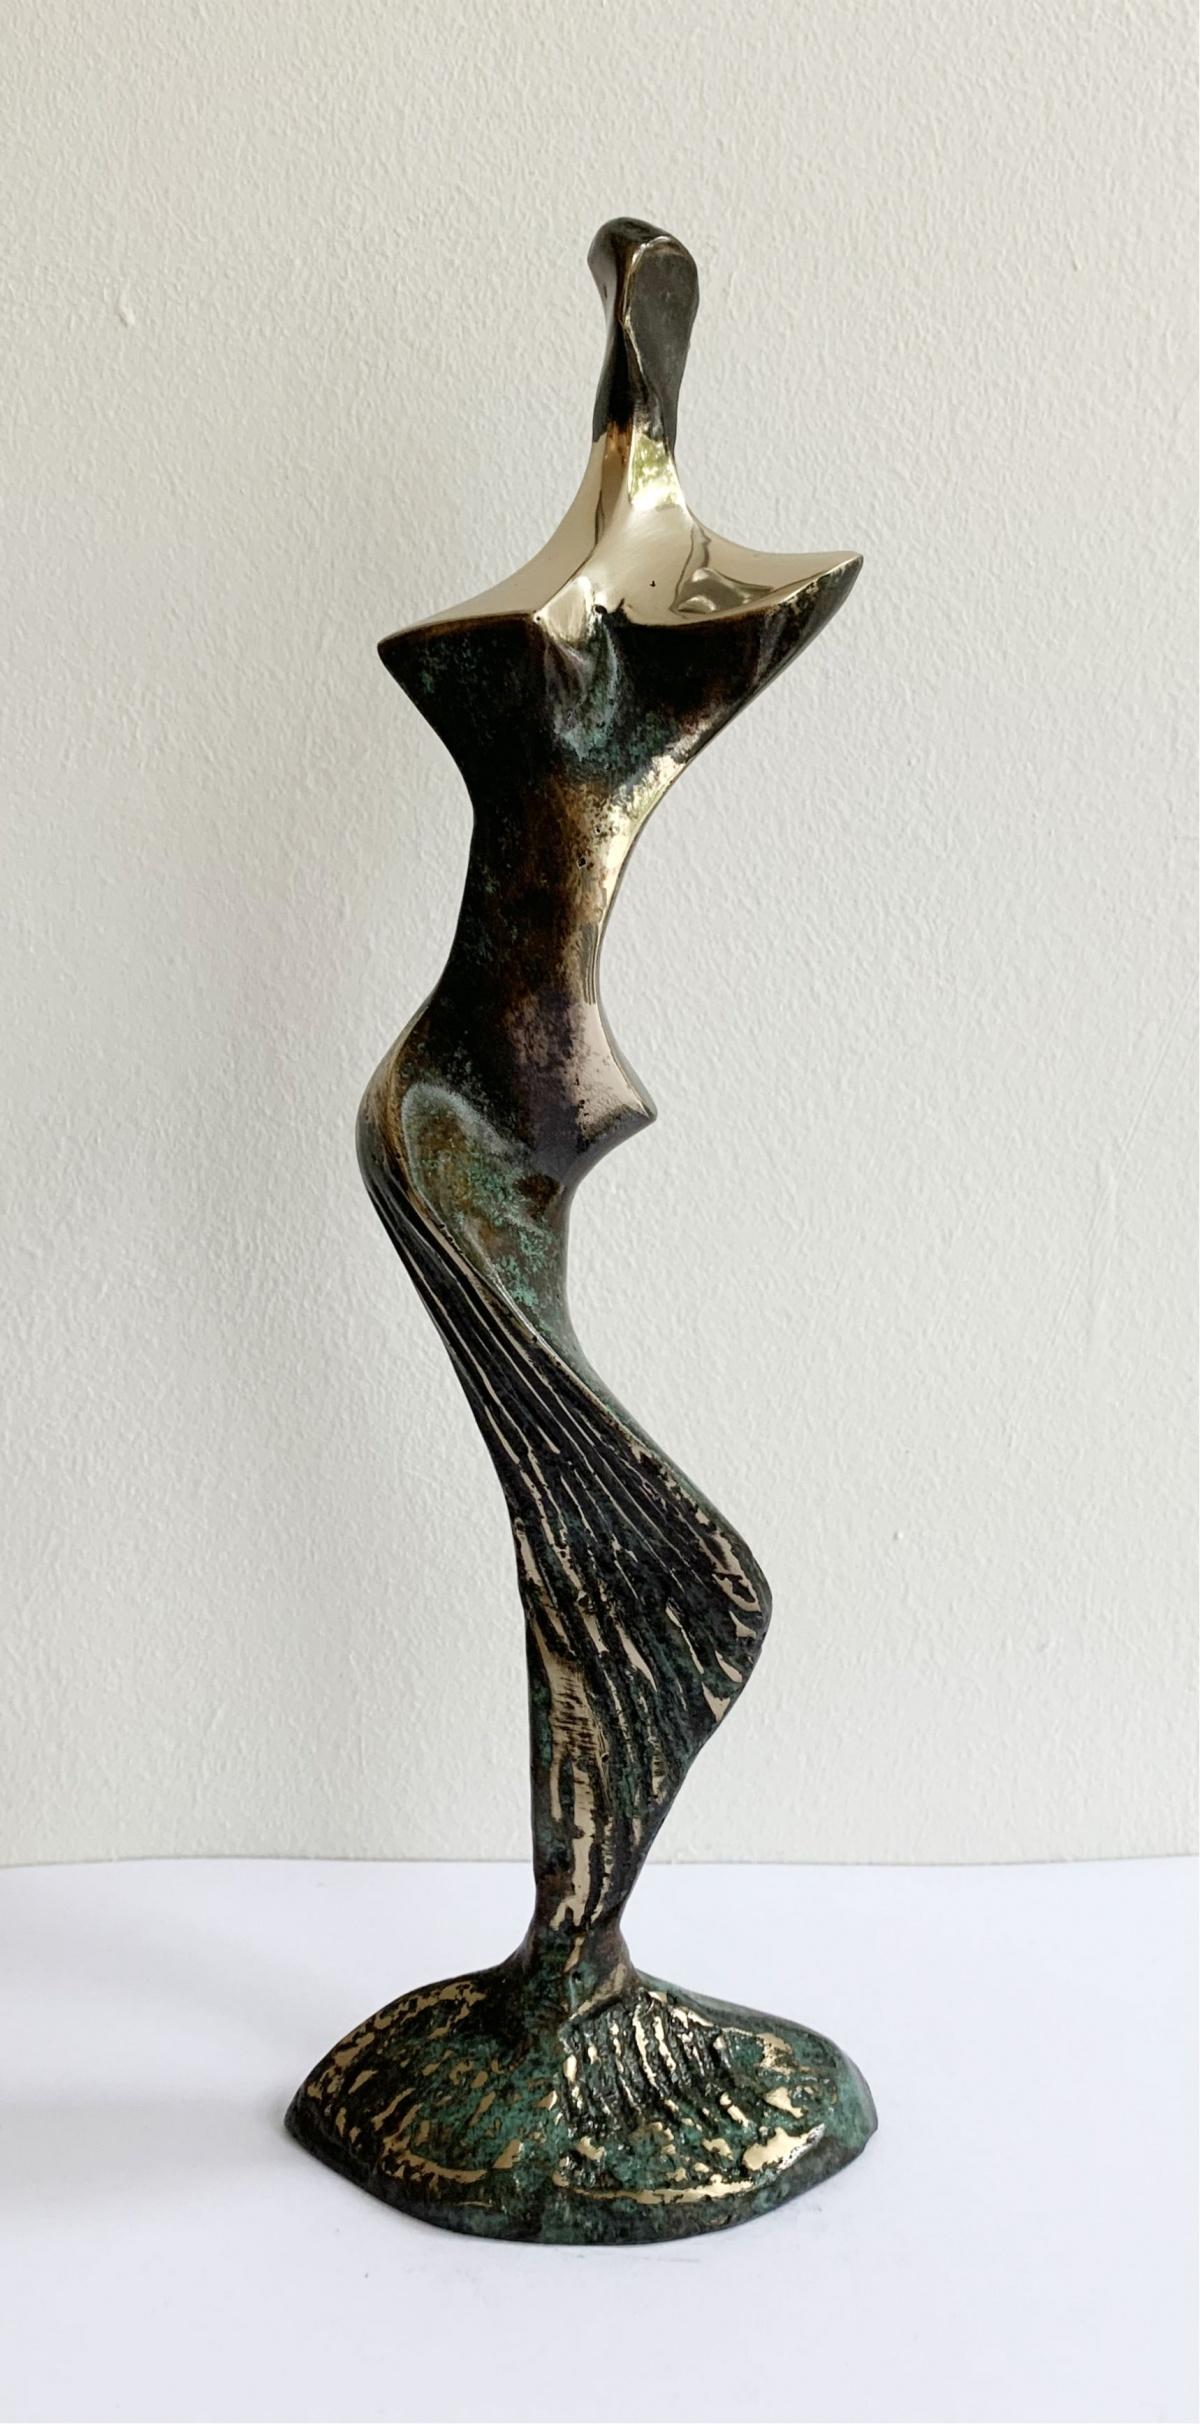 Stanisław Wysocki Abstract Sculpture - Nude - XXI century Contemporary bronze sculpture, Abstract & figurative